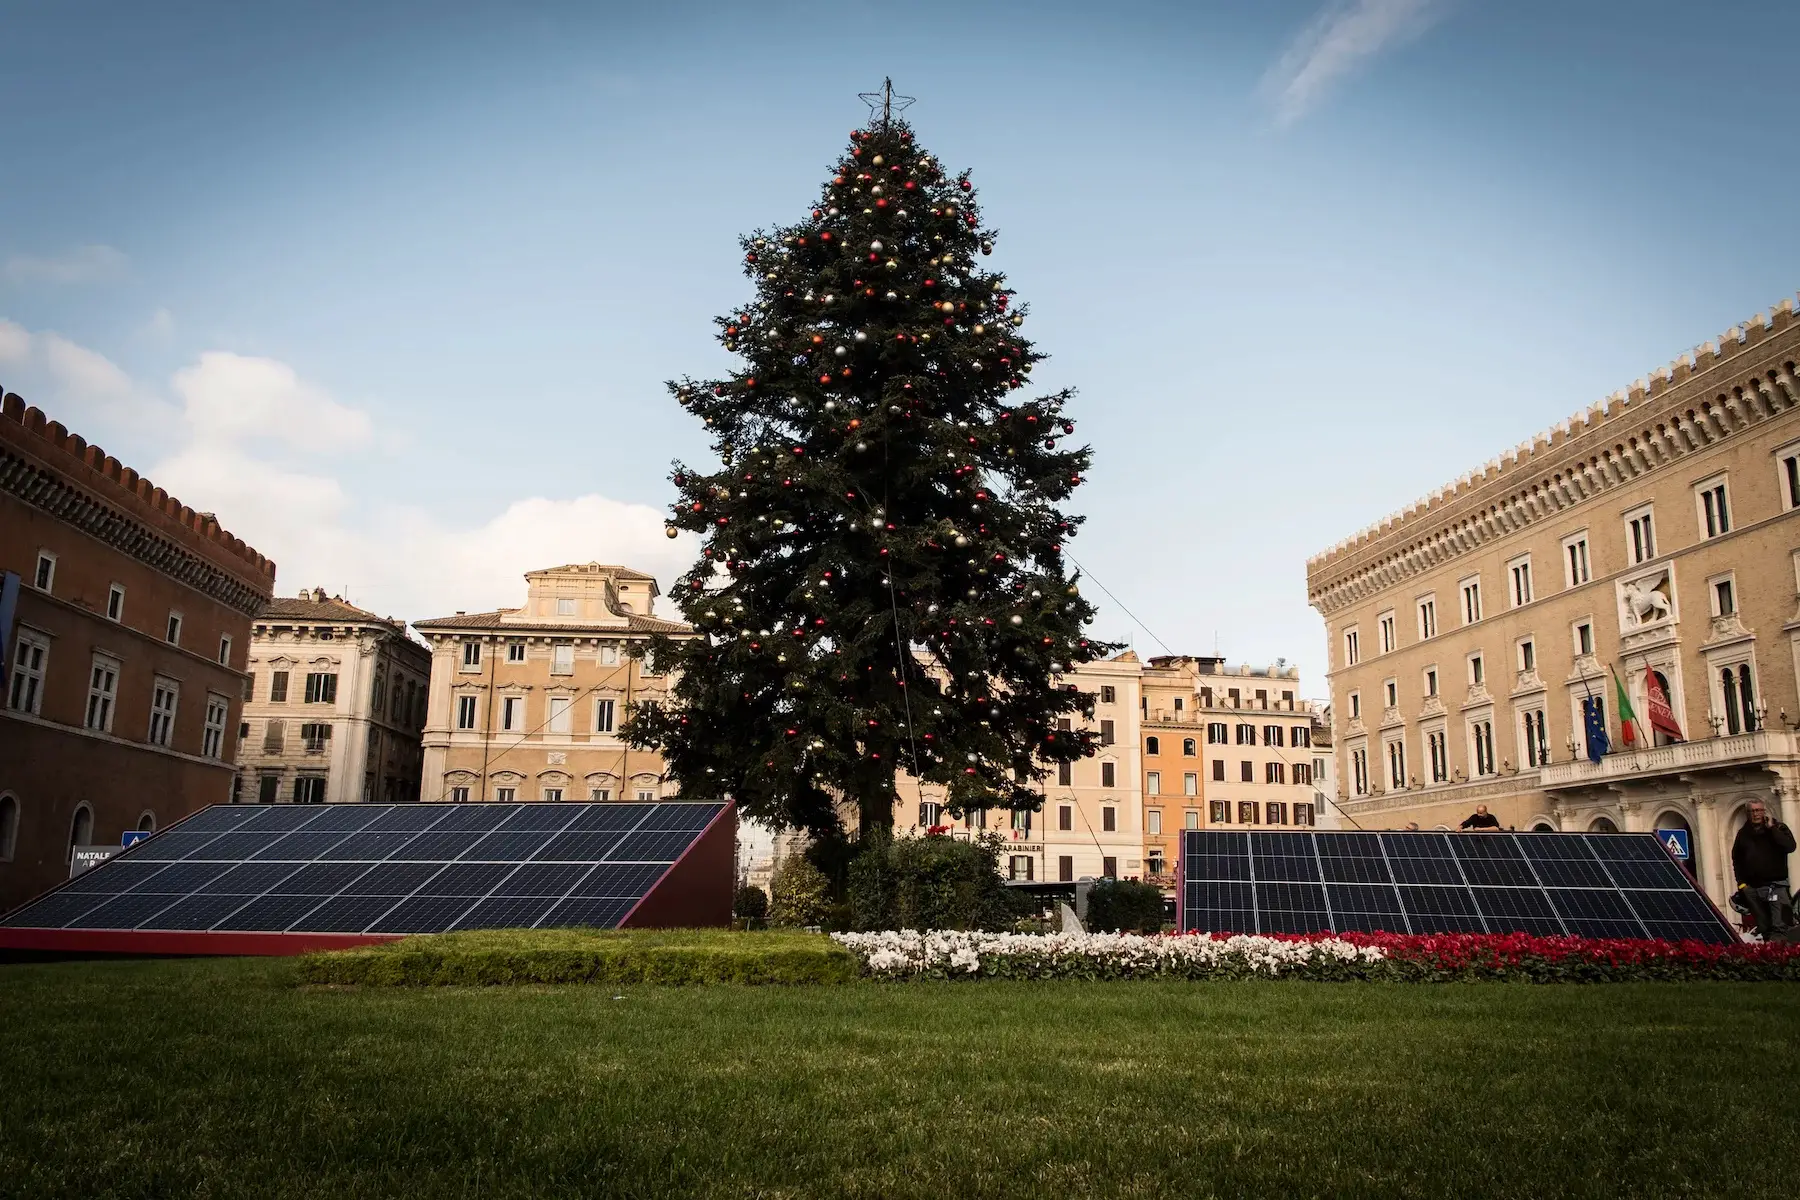 Solar-powered Christmas tree at Piazza Venezia in Rome